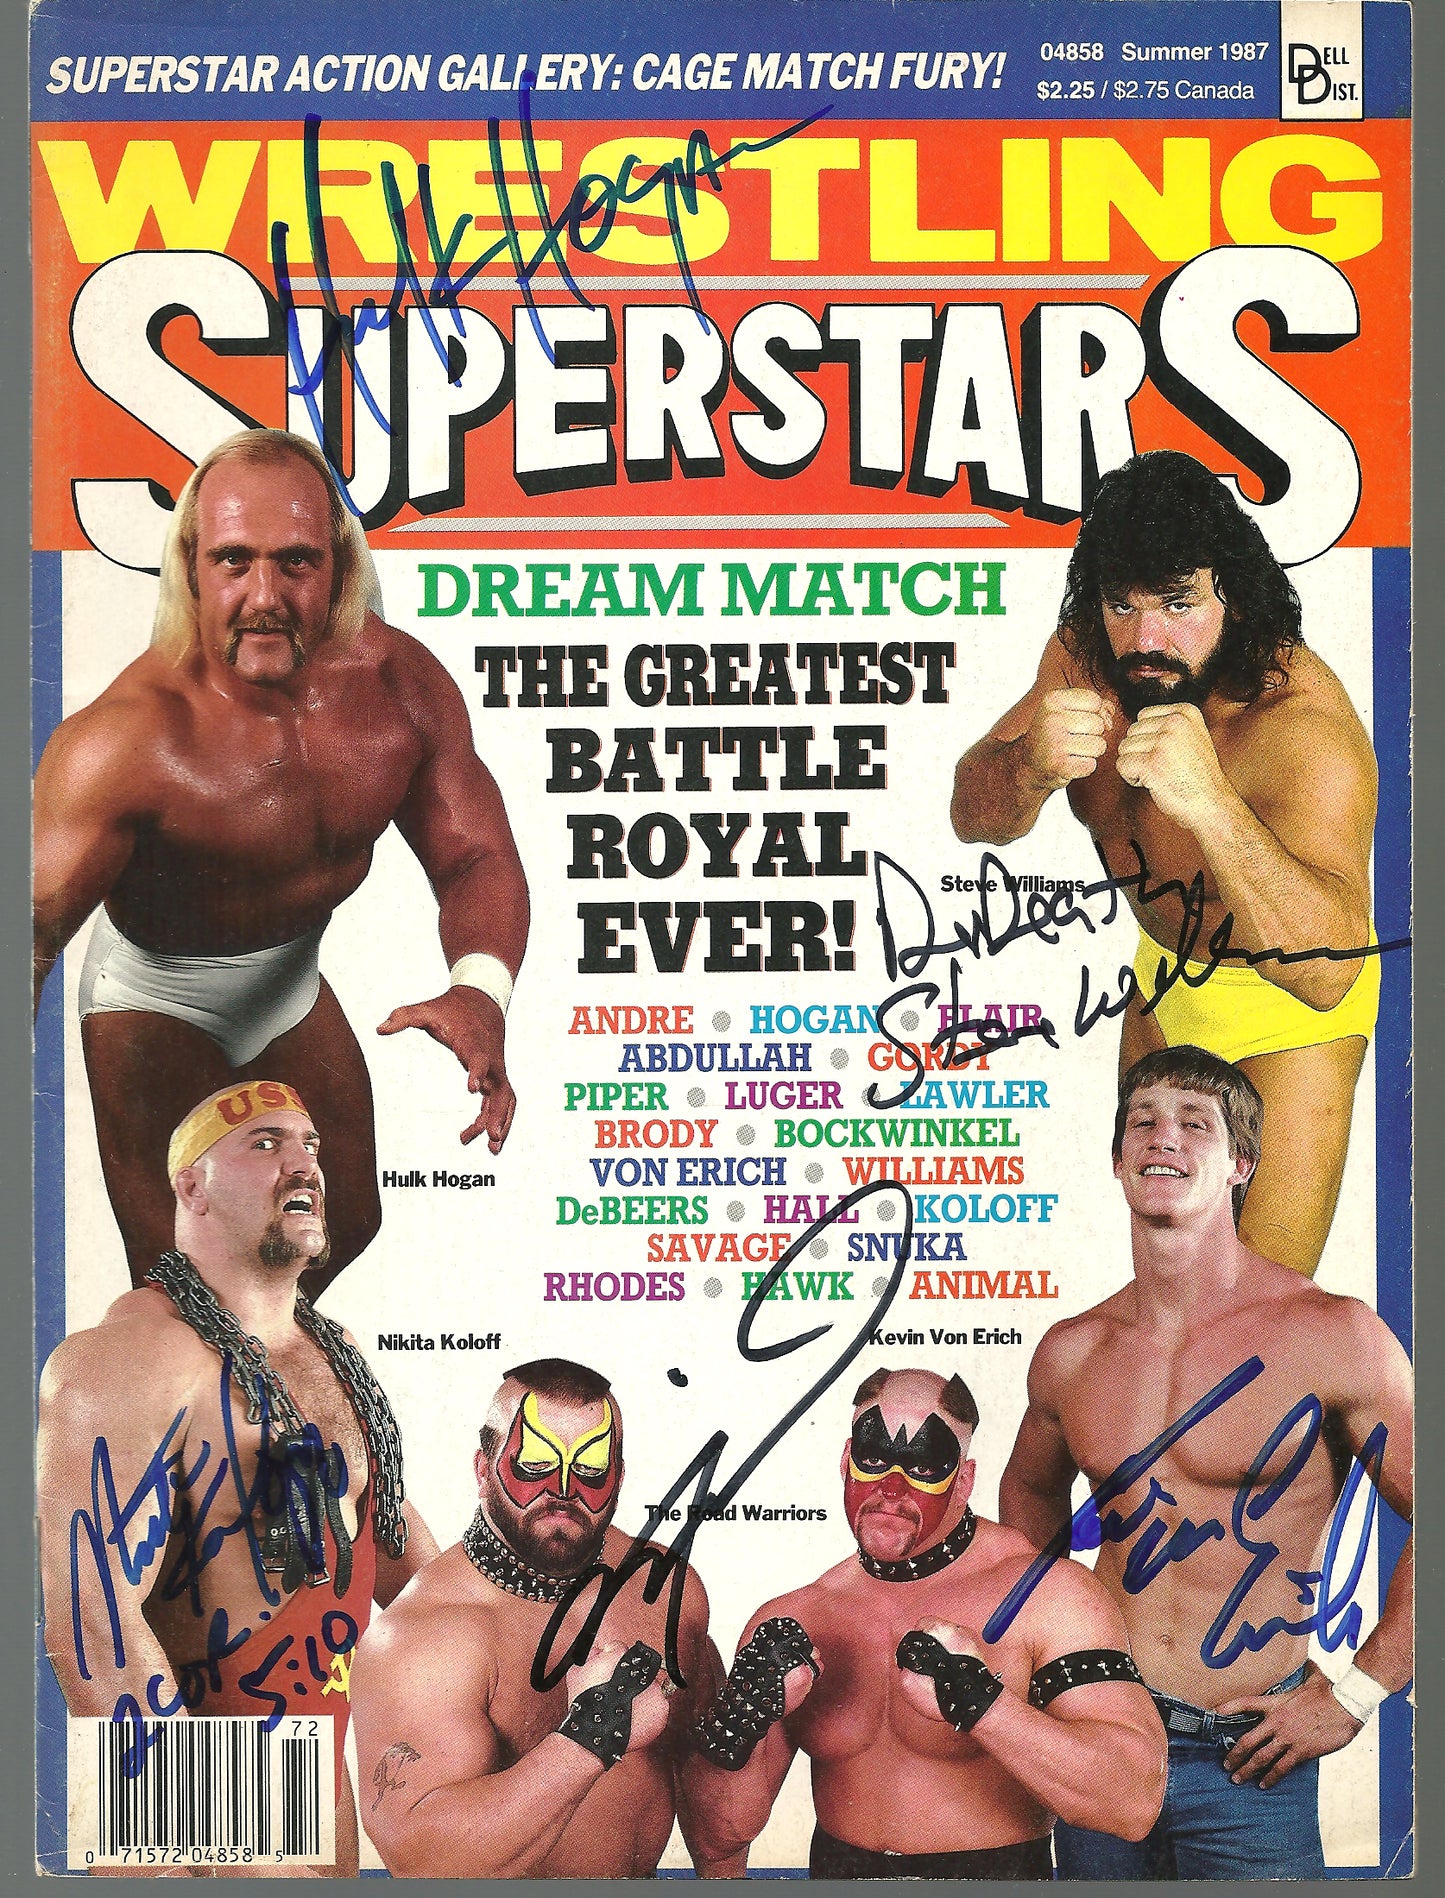 AM406  Hulk Hogan  Kevin Von Erich  Dr. Death Steve Williams ( Deceased )  Road Warrior Animal (Deceased )  Nikita Koloff   Autographed vintage Wrestling Magazine w/COA